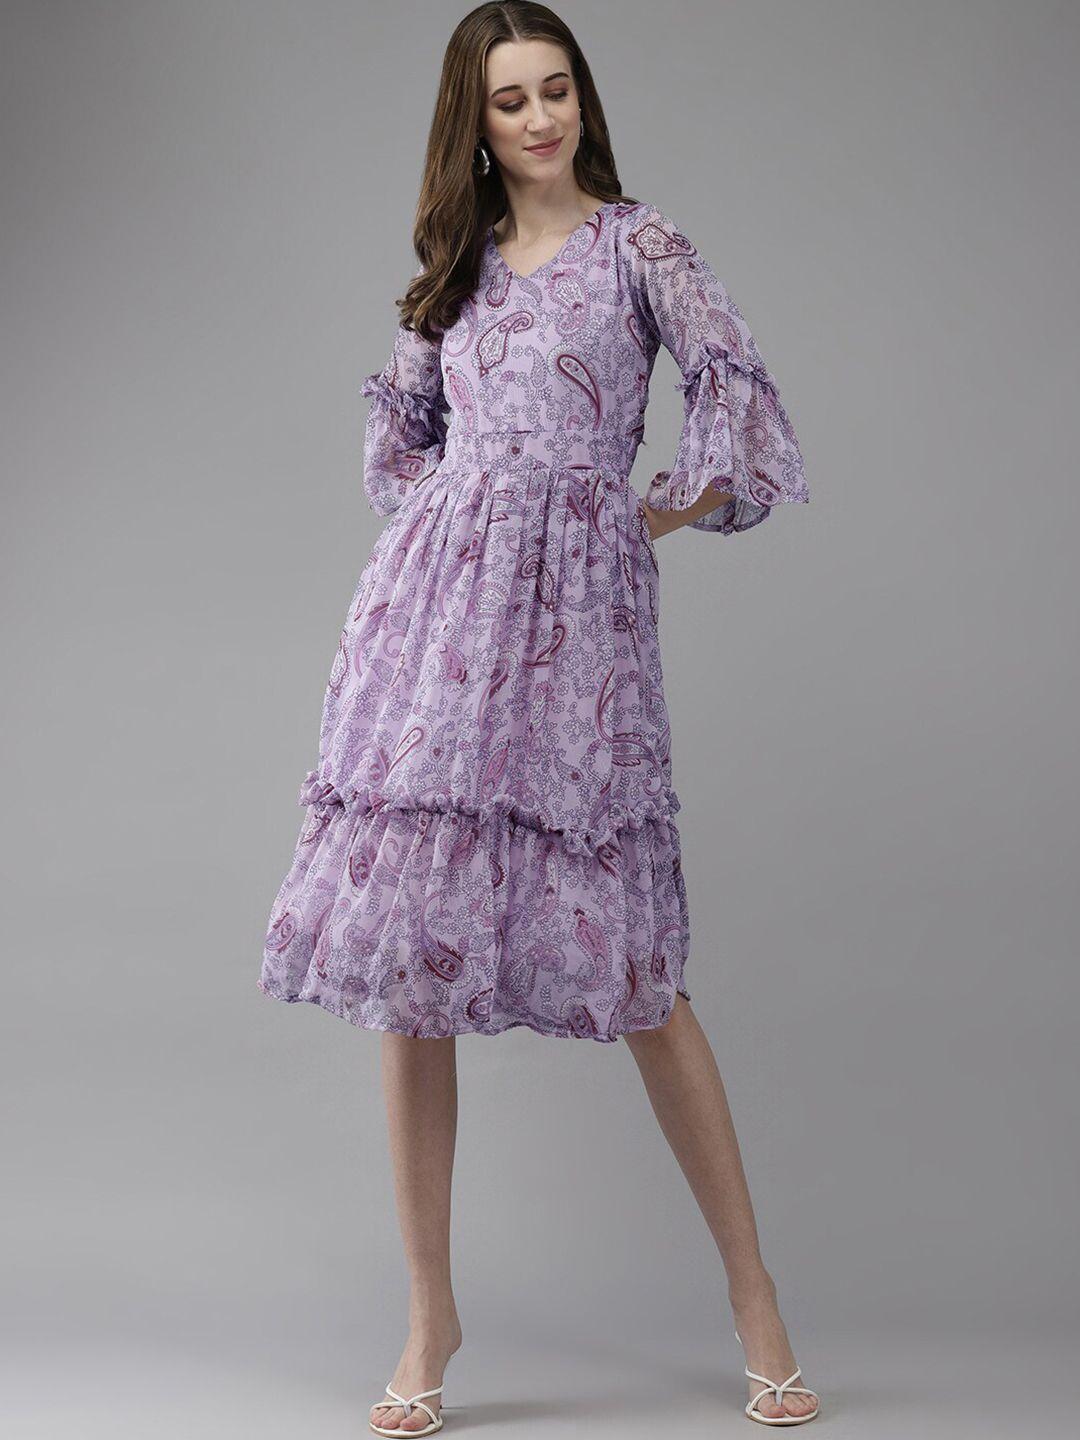 baesd purple floral print bell sleeve georgette fit & flare dress